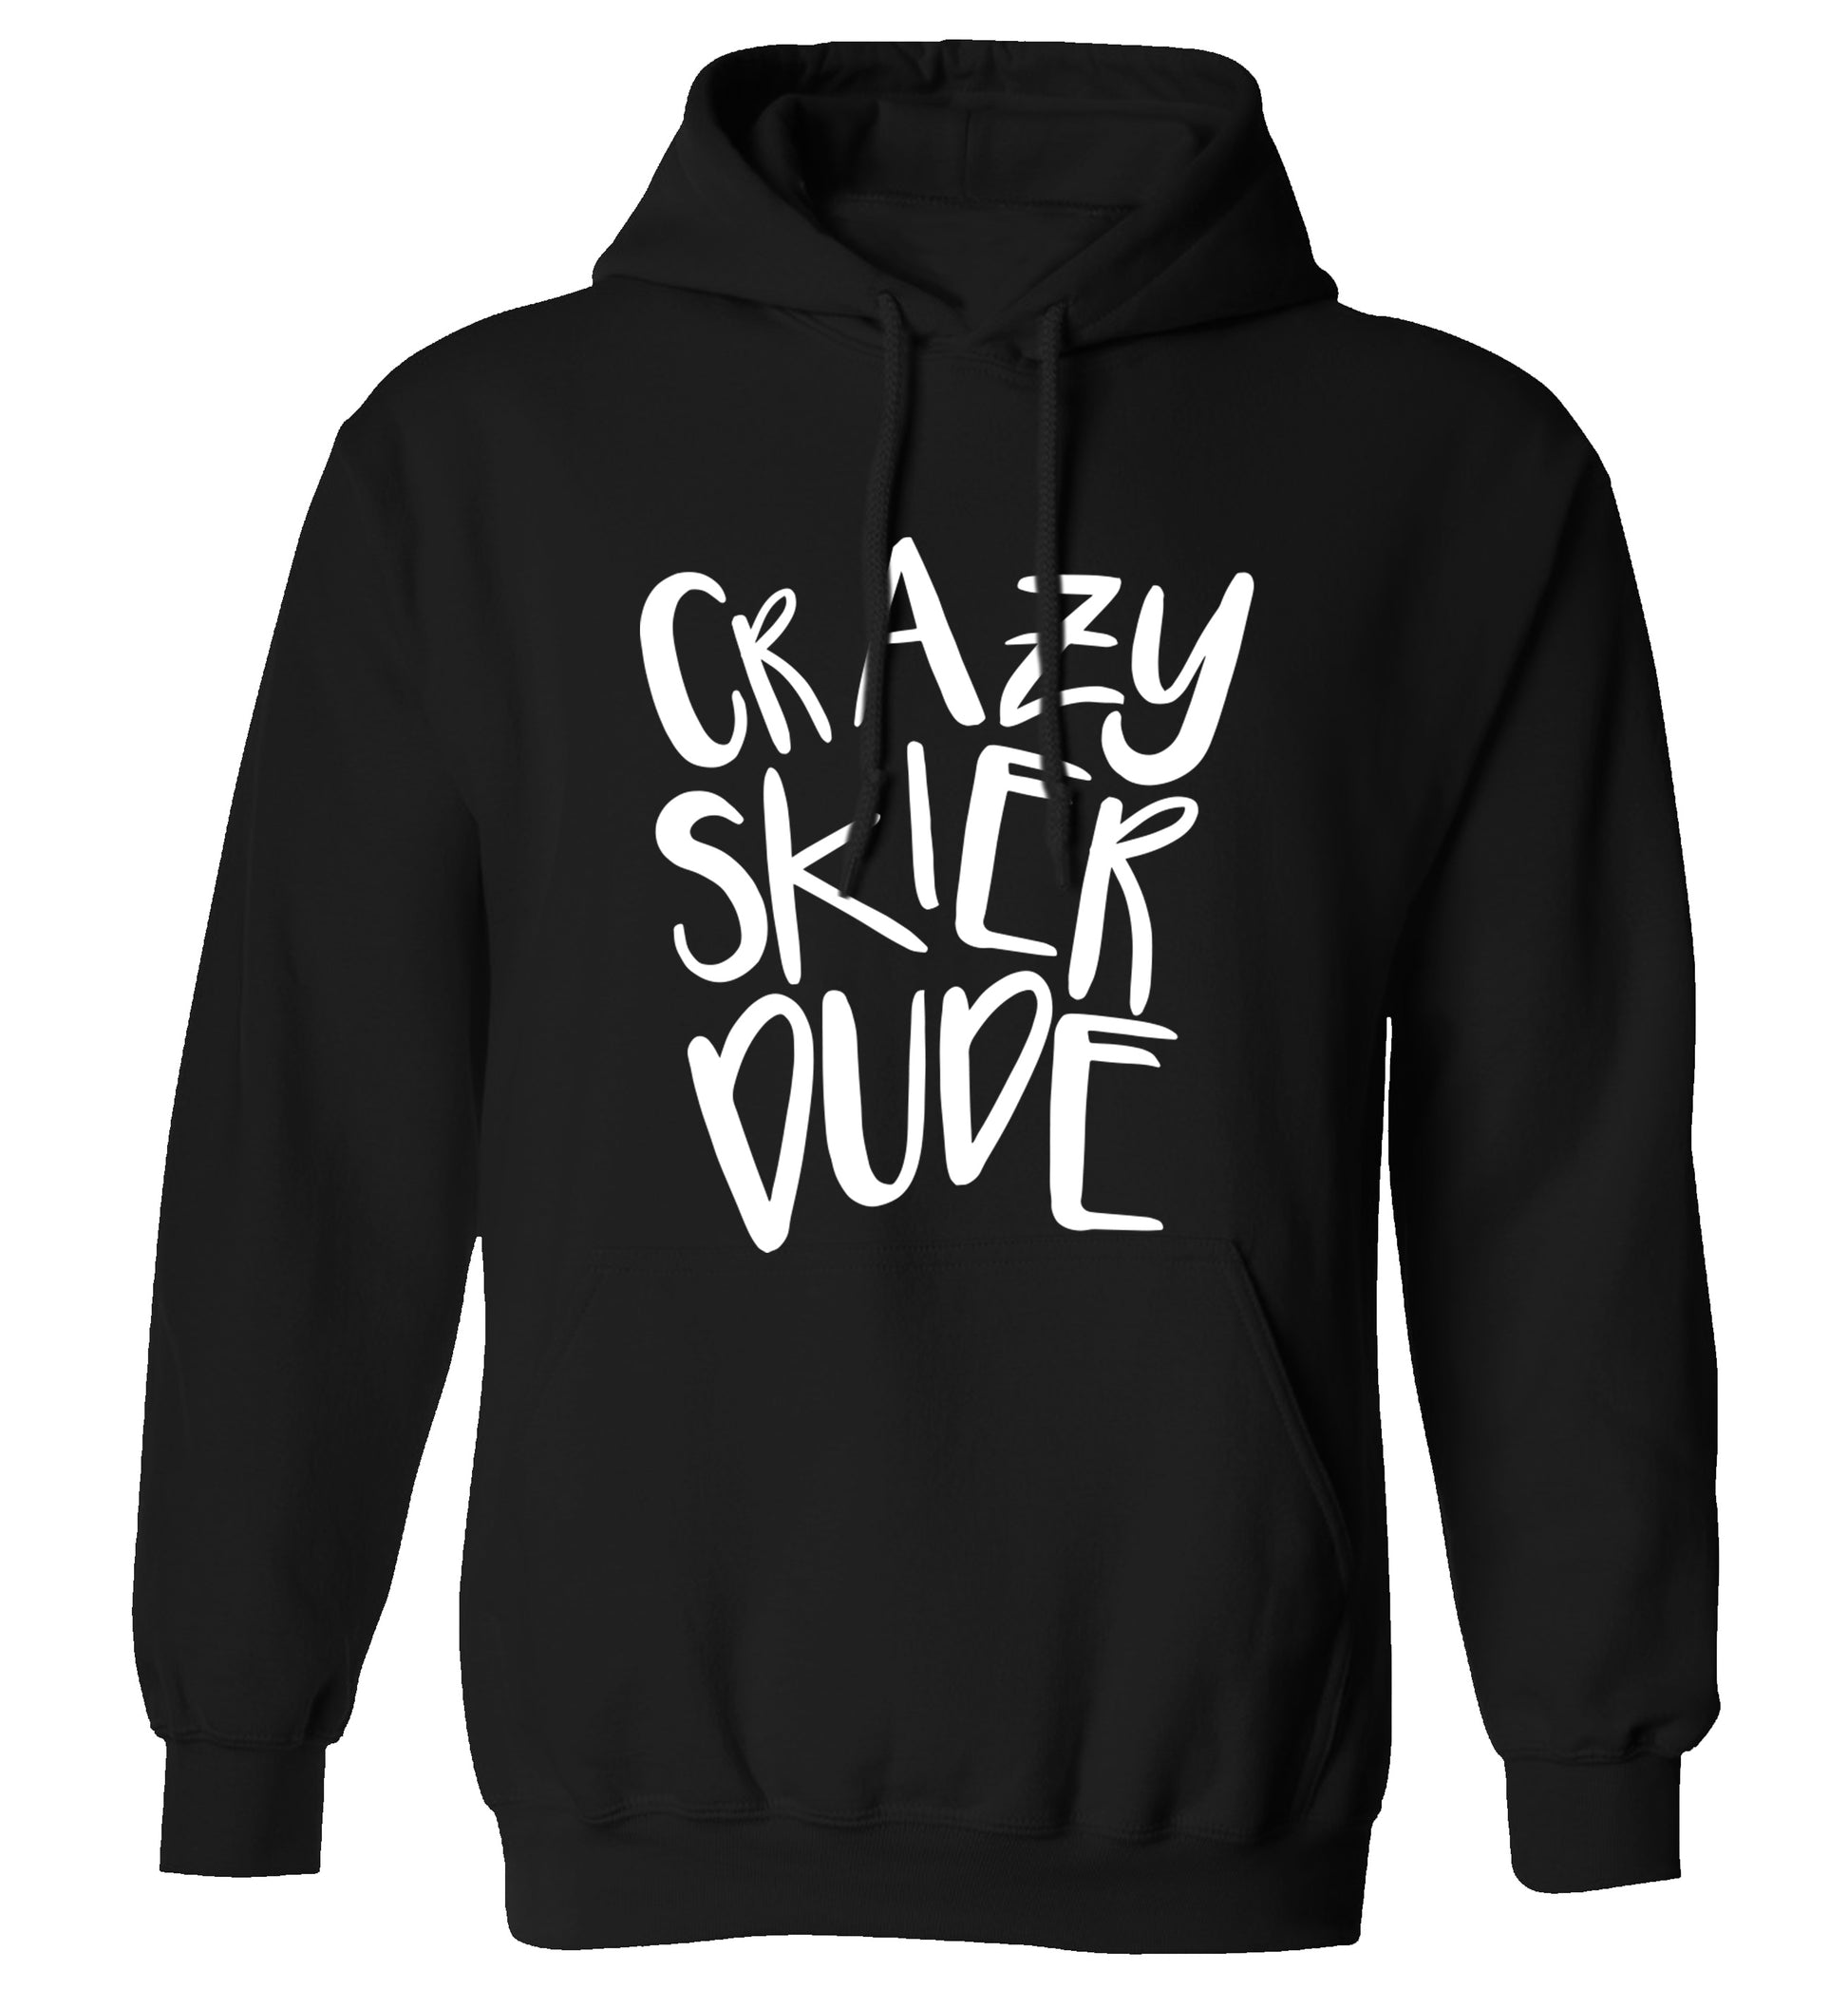 Crazy skier dude adults unisexblack hoodie 2XL